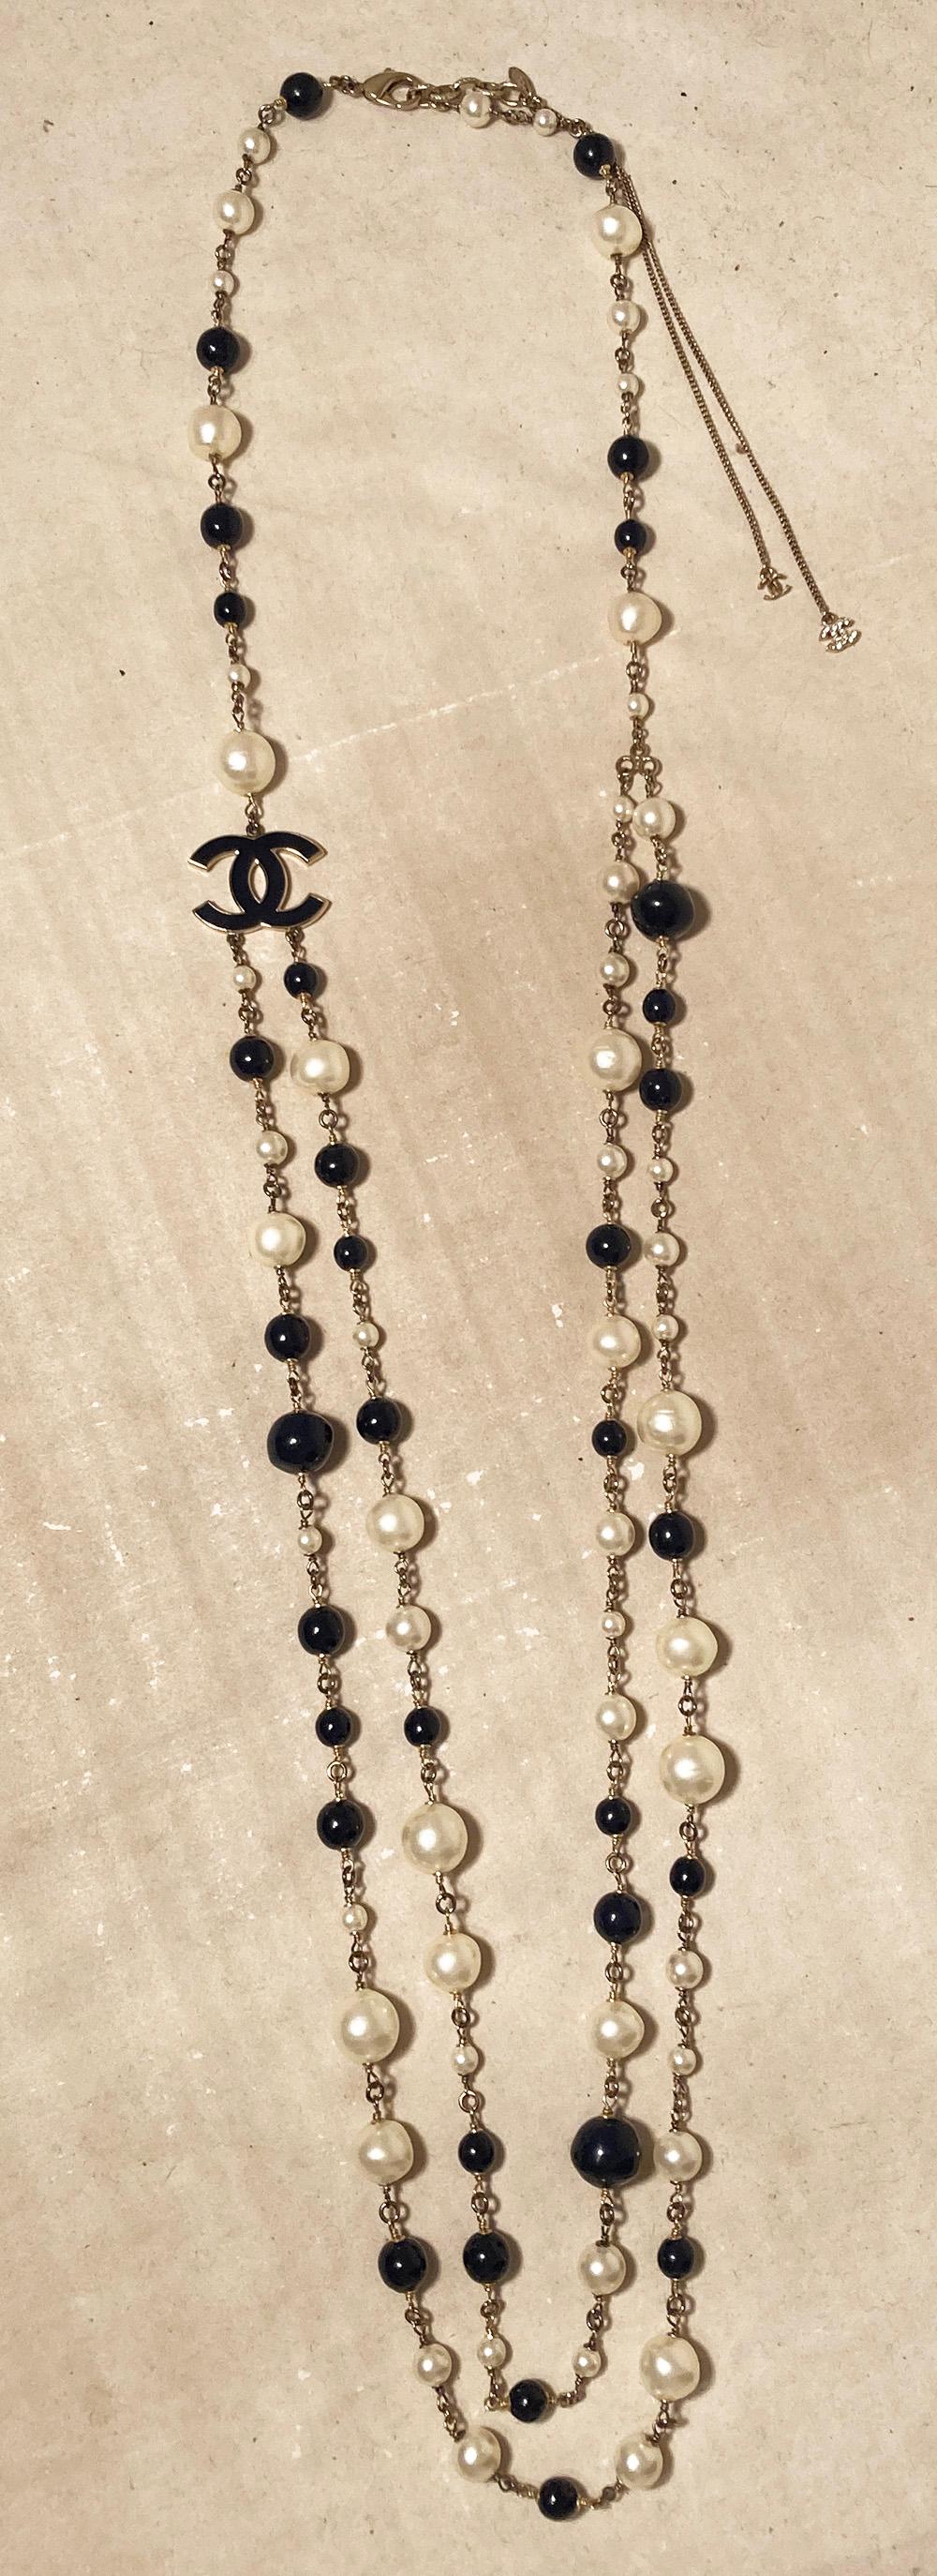 chanel black bead necklace